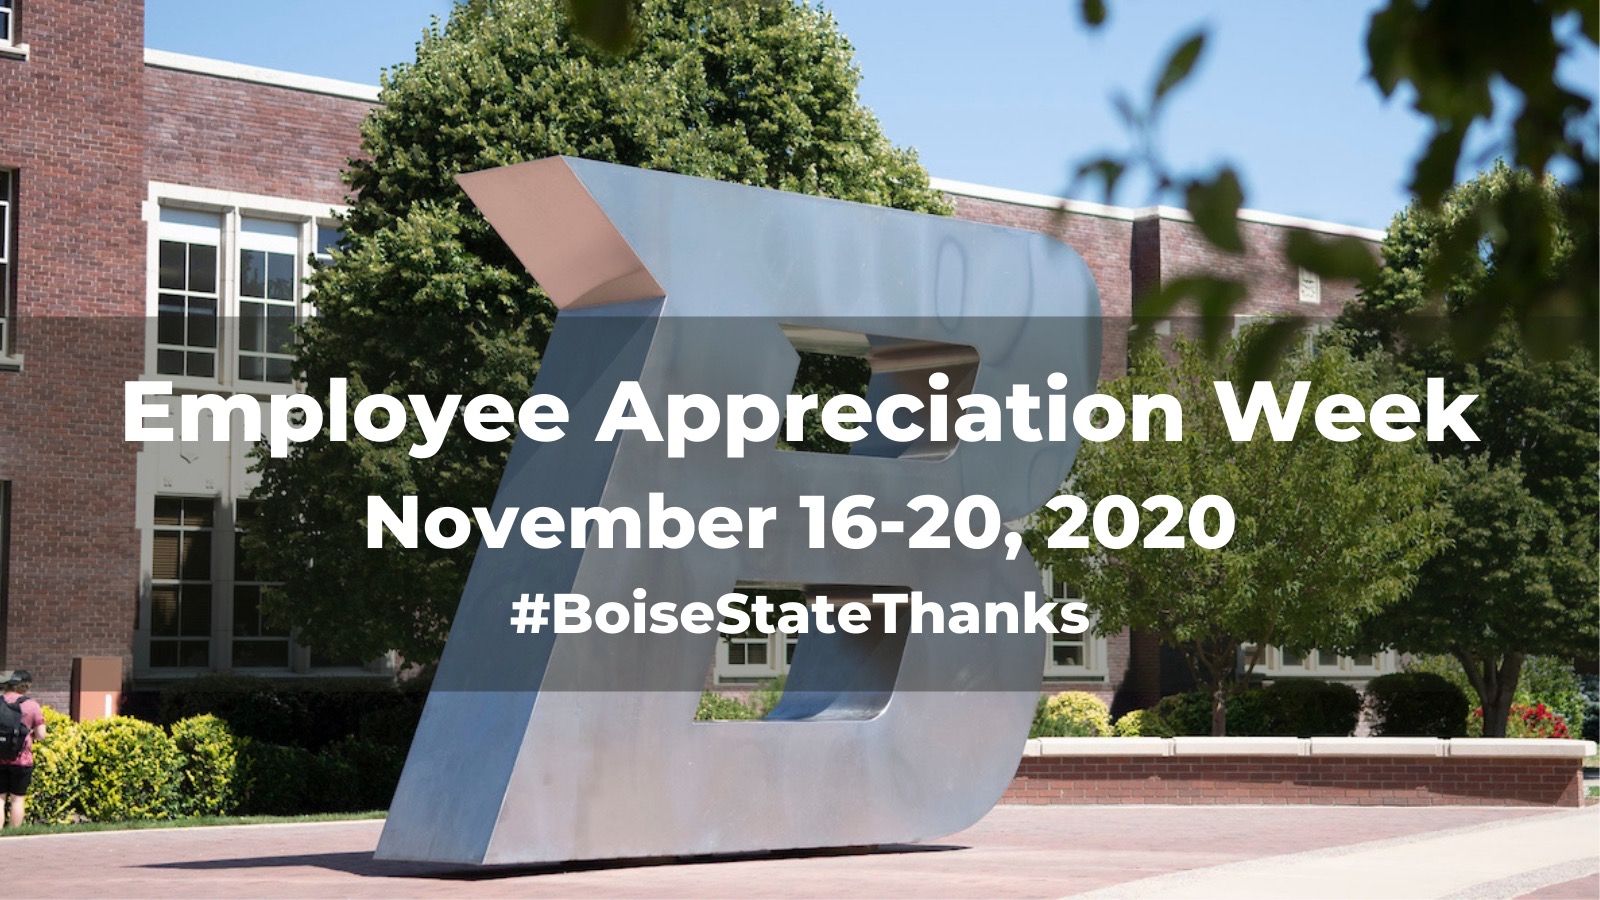 Employee Appreciation Week, November 16-20, 2020 - #BoiseStateThanks